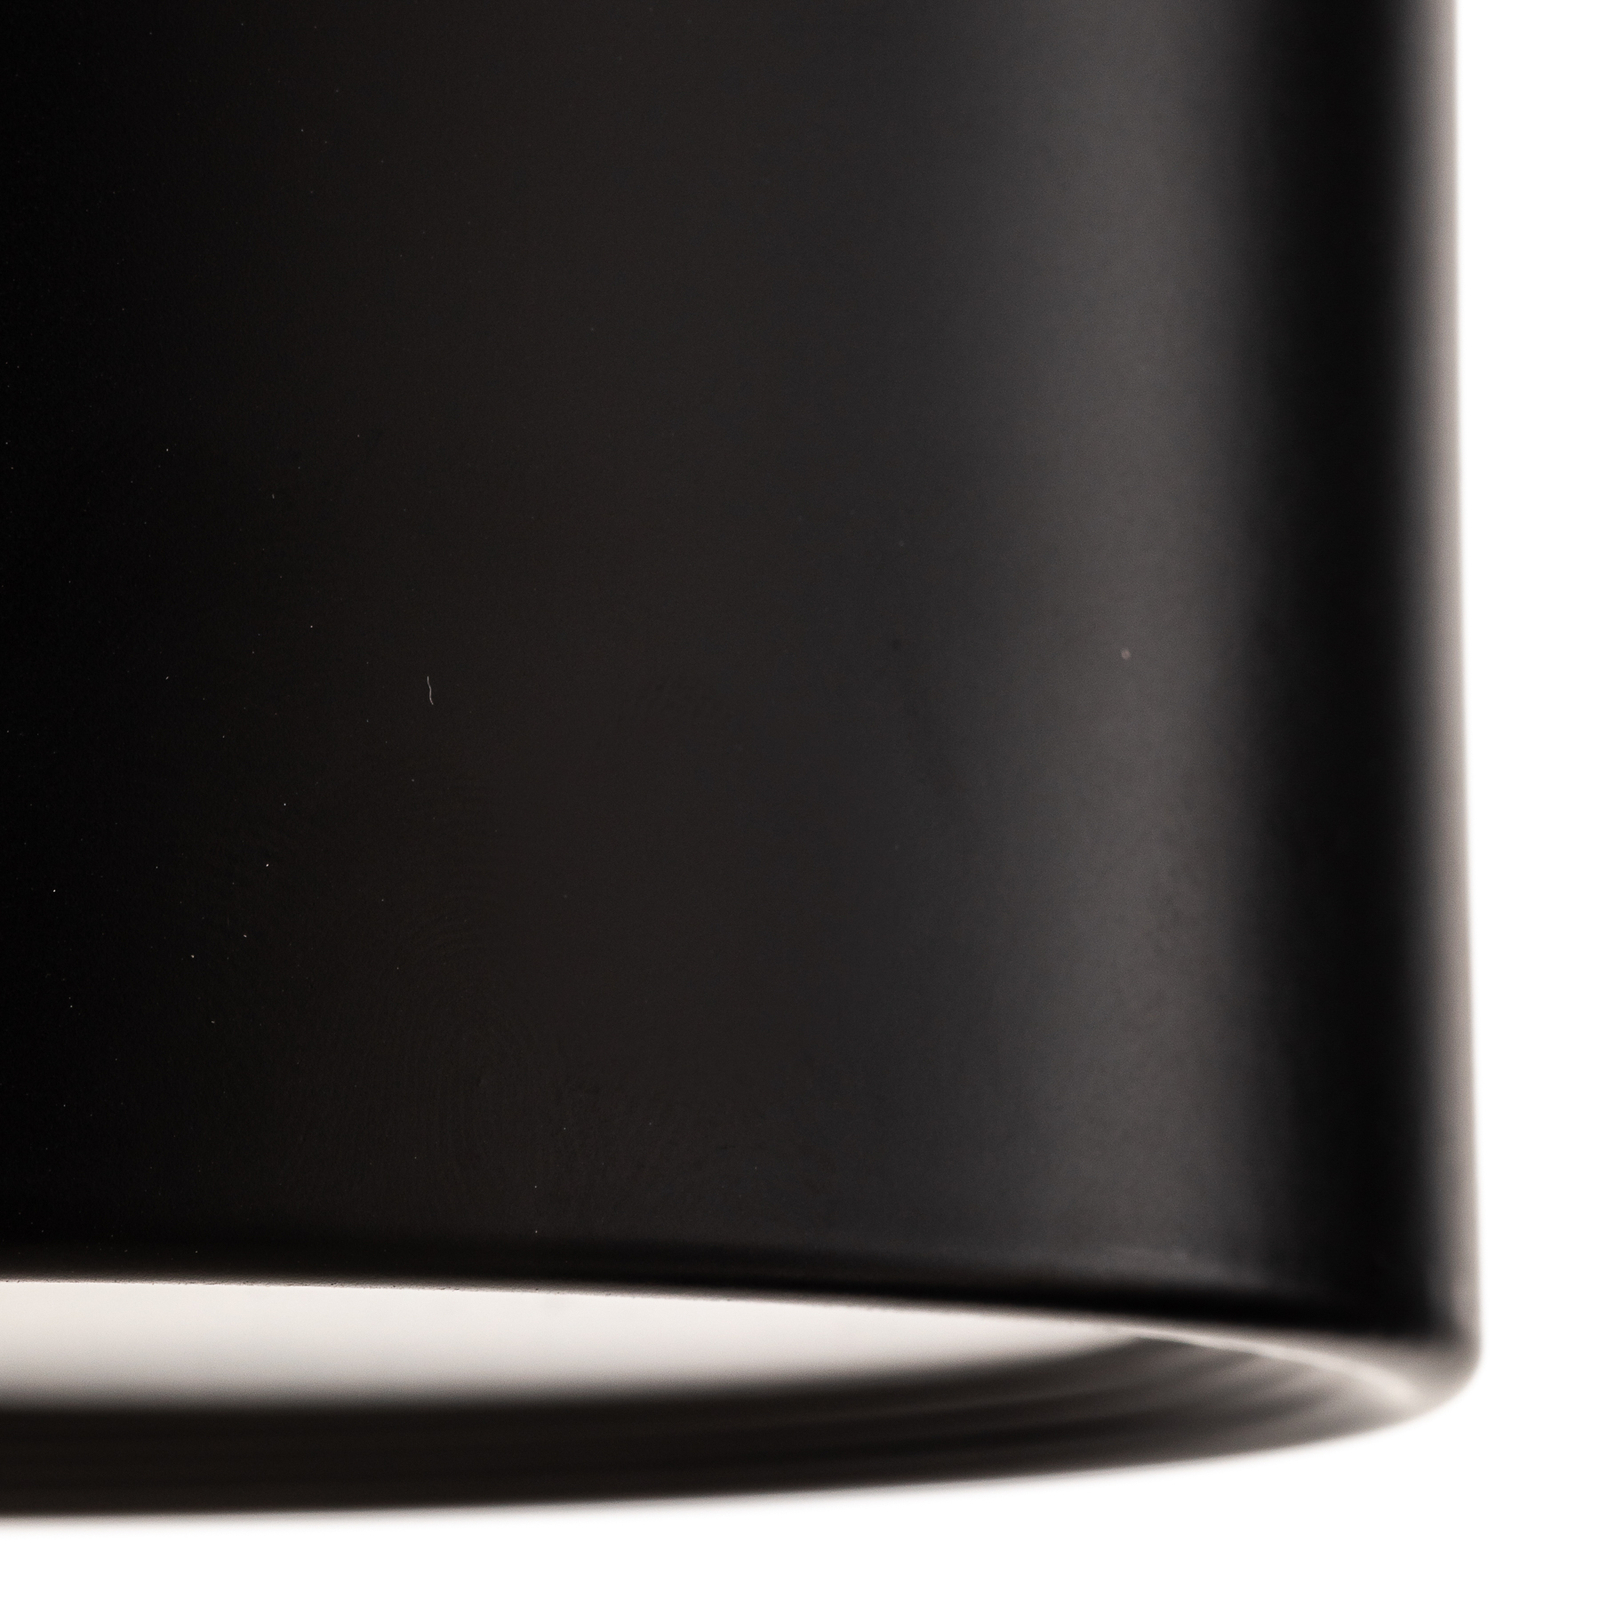 LED downlight Ita in black with diffuser, Ø 10 cm